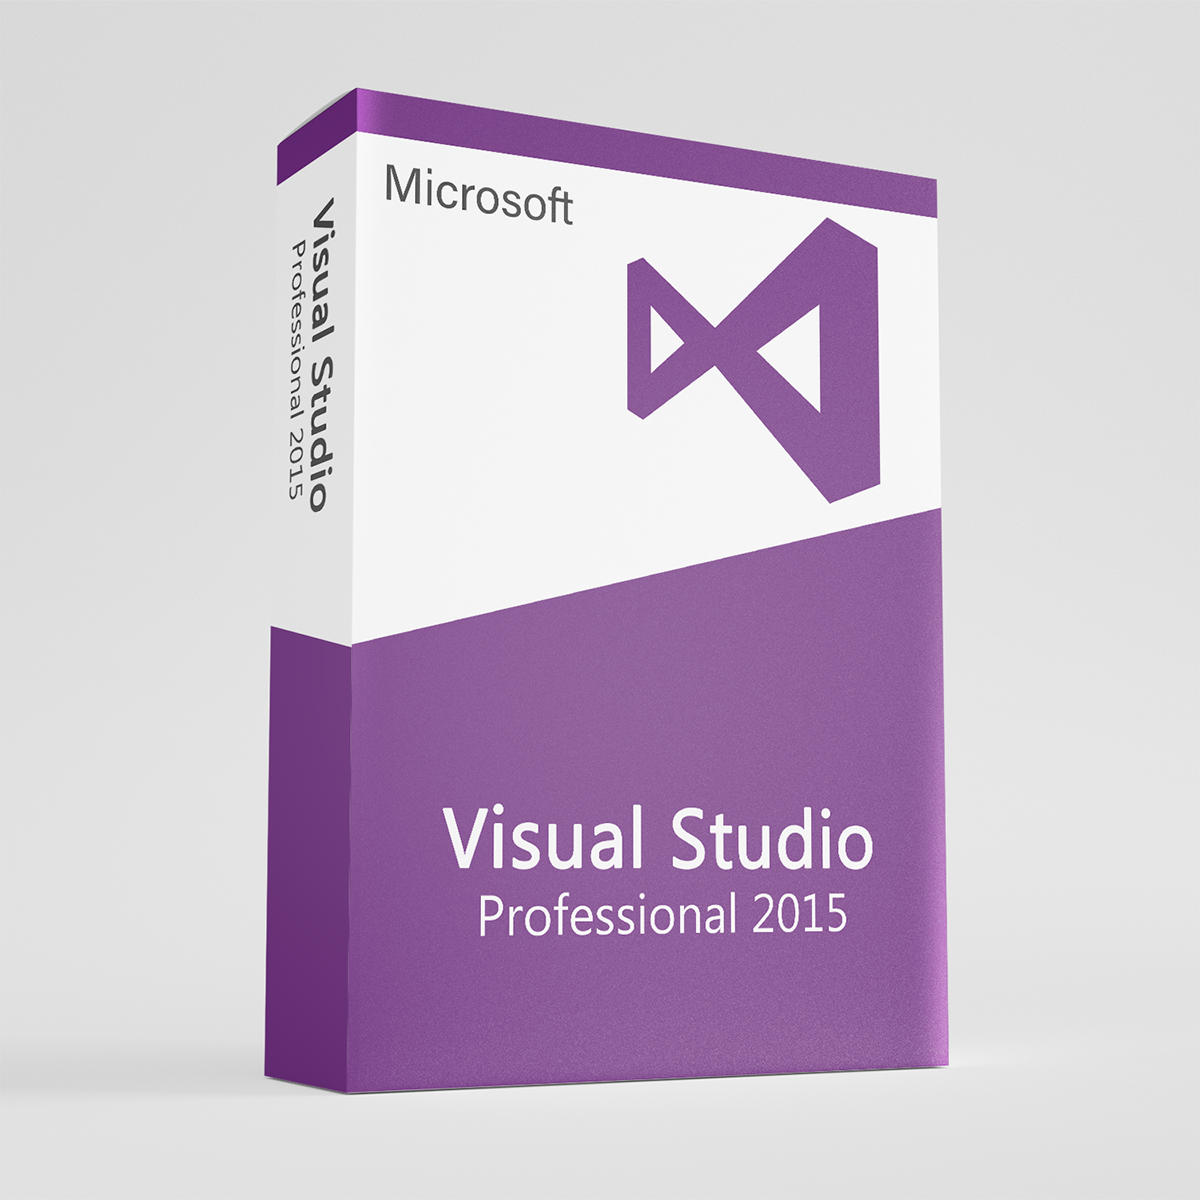 visual studio 2015 professional download free full version